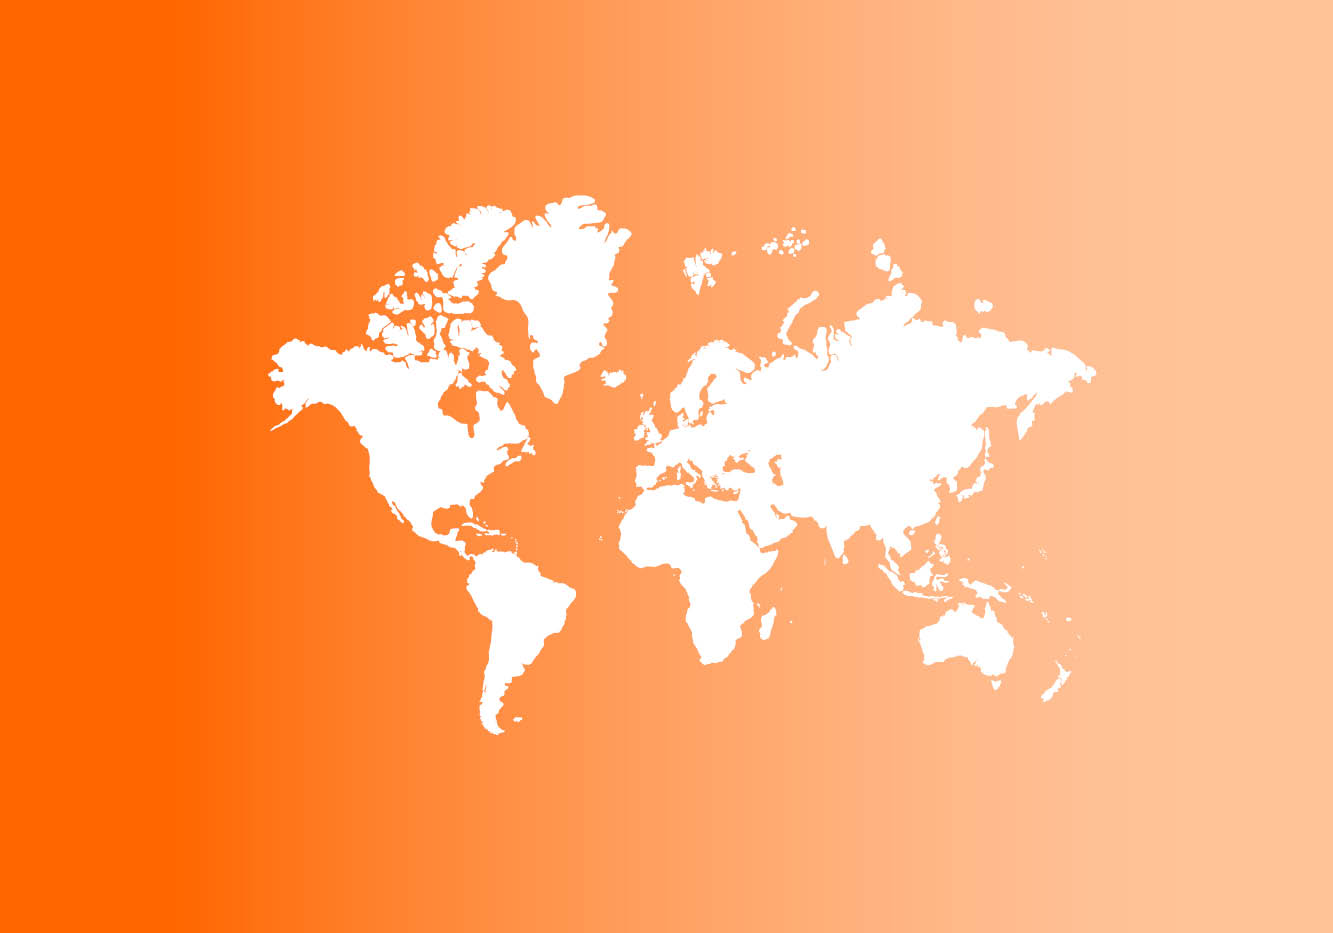 white map pf the world on orange background